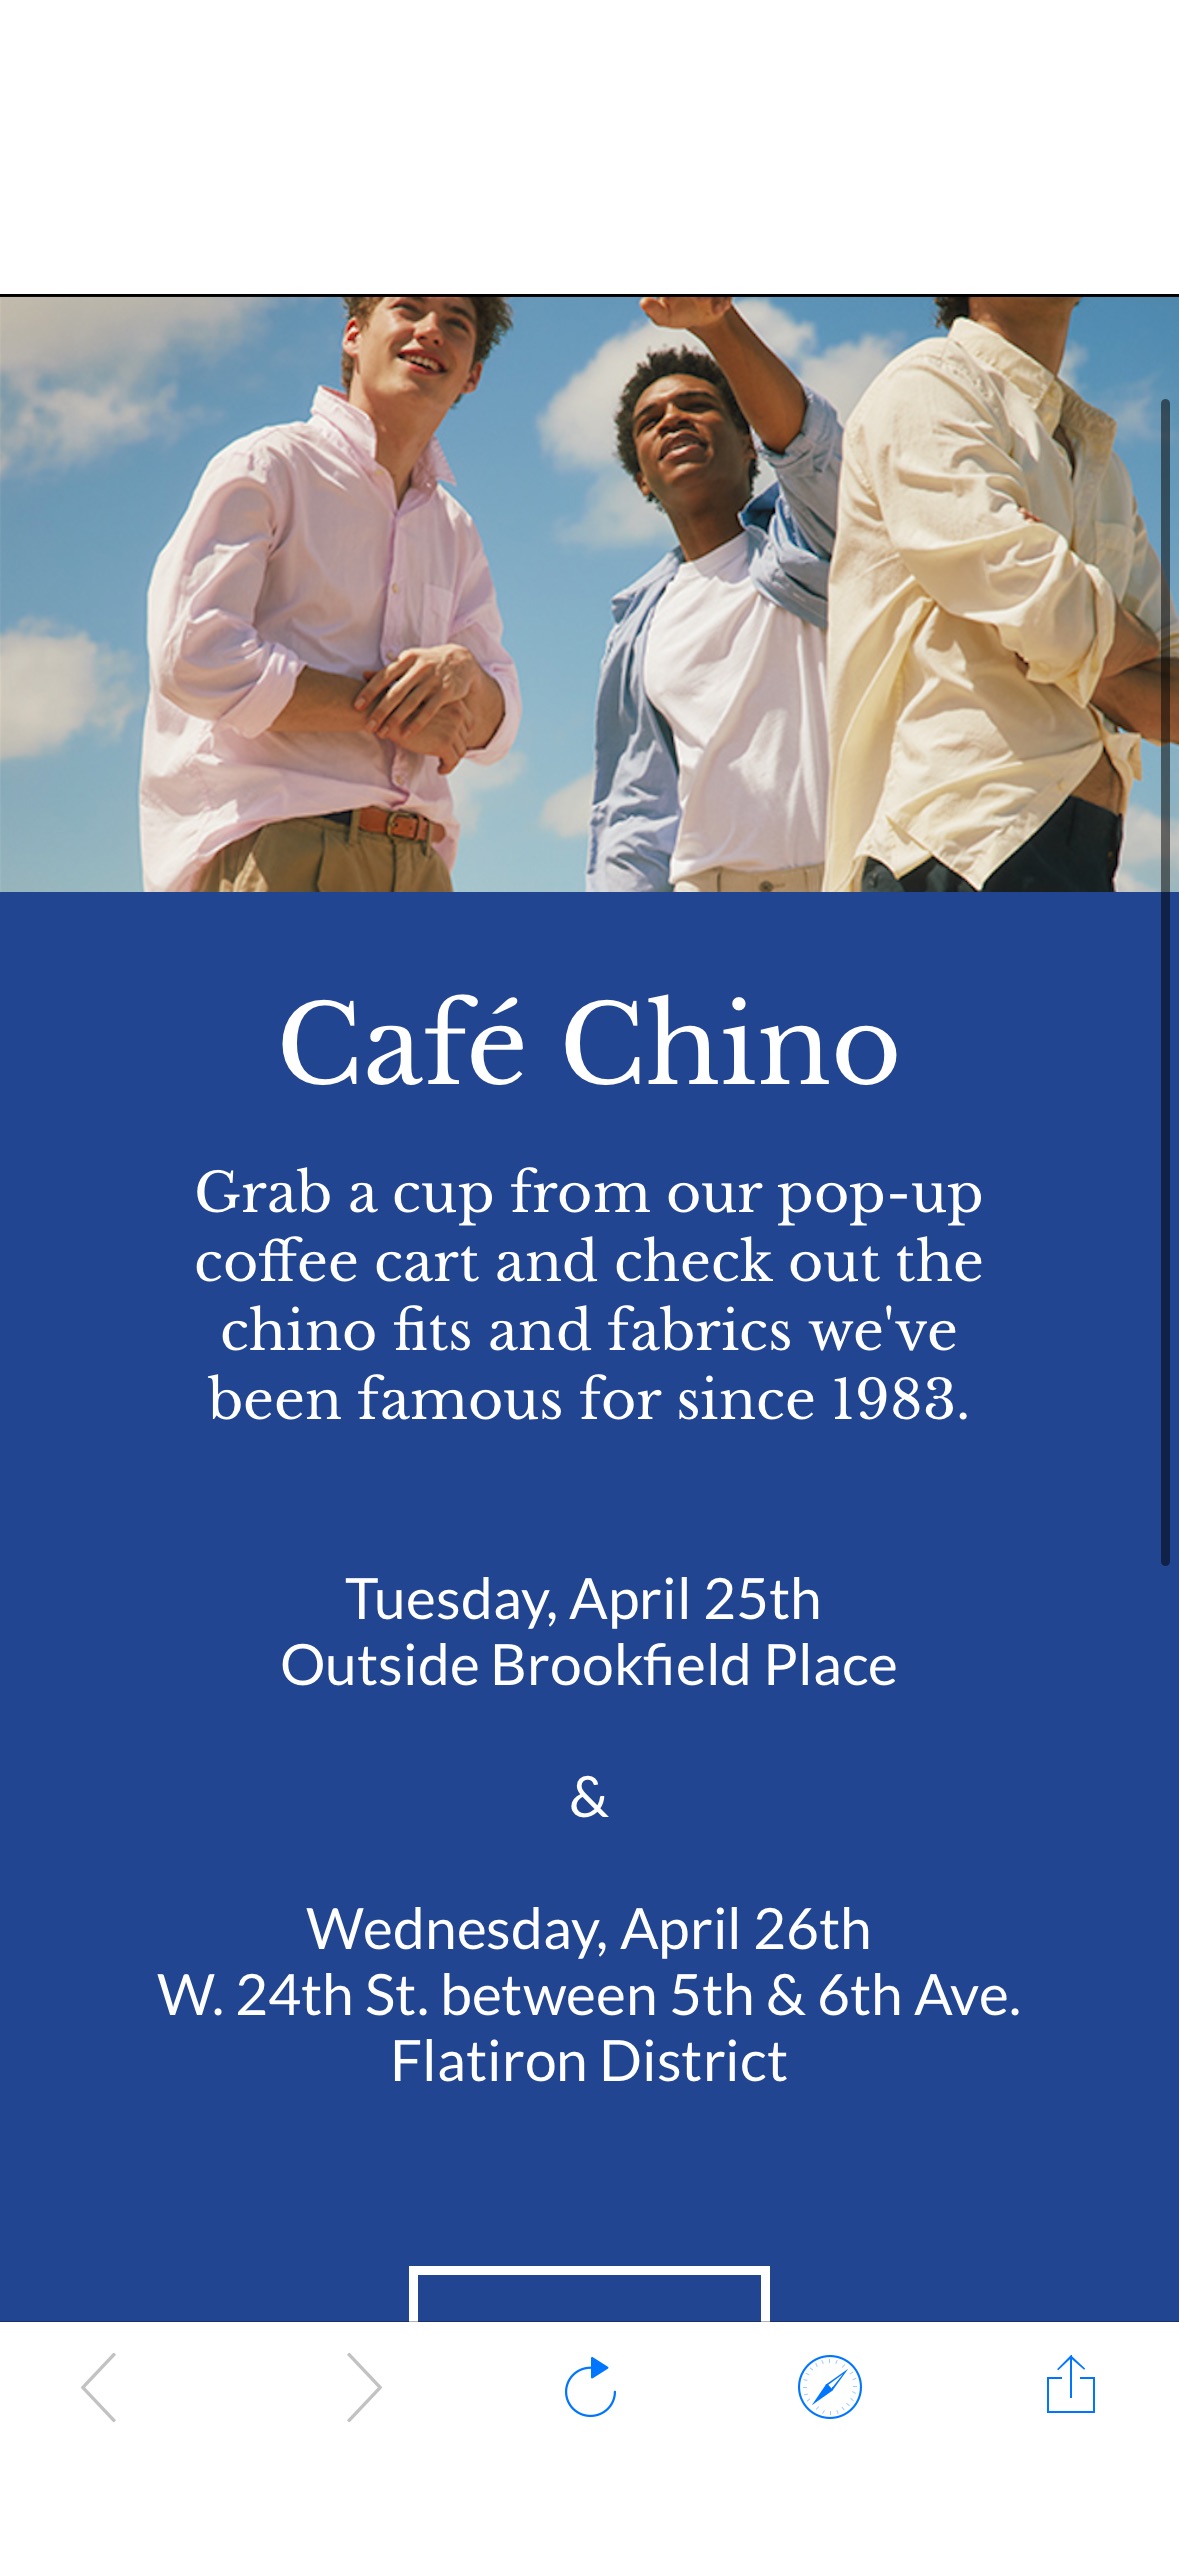 Free Coffee at Jcrew Café Chino